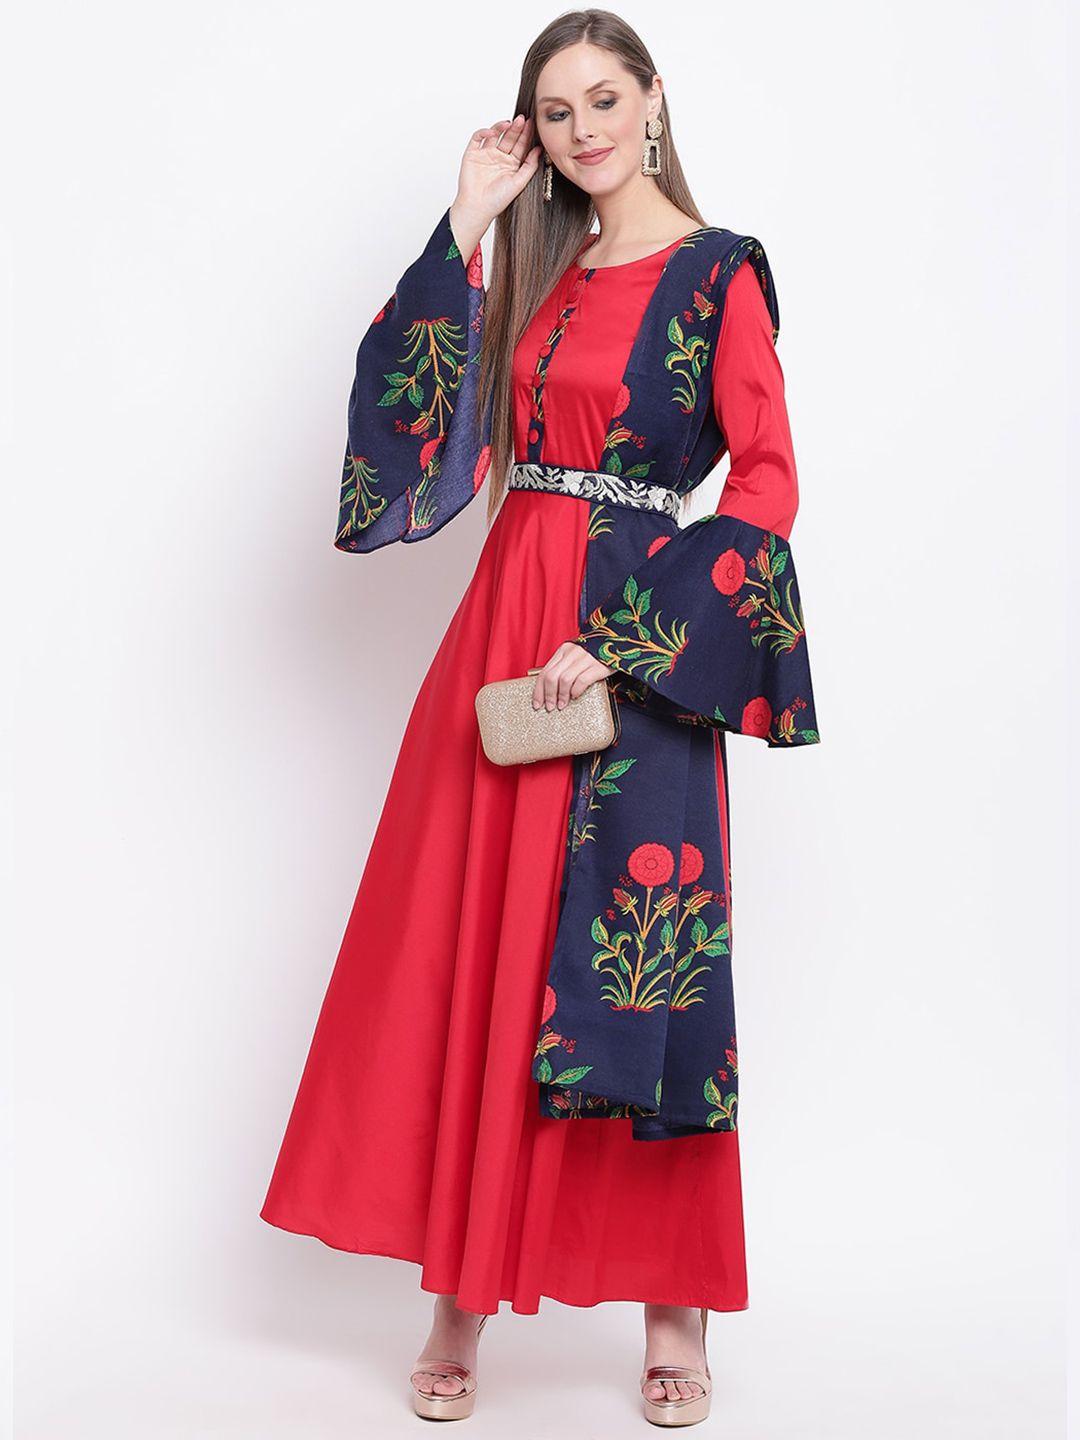 prenea women floral printed maxi dress